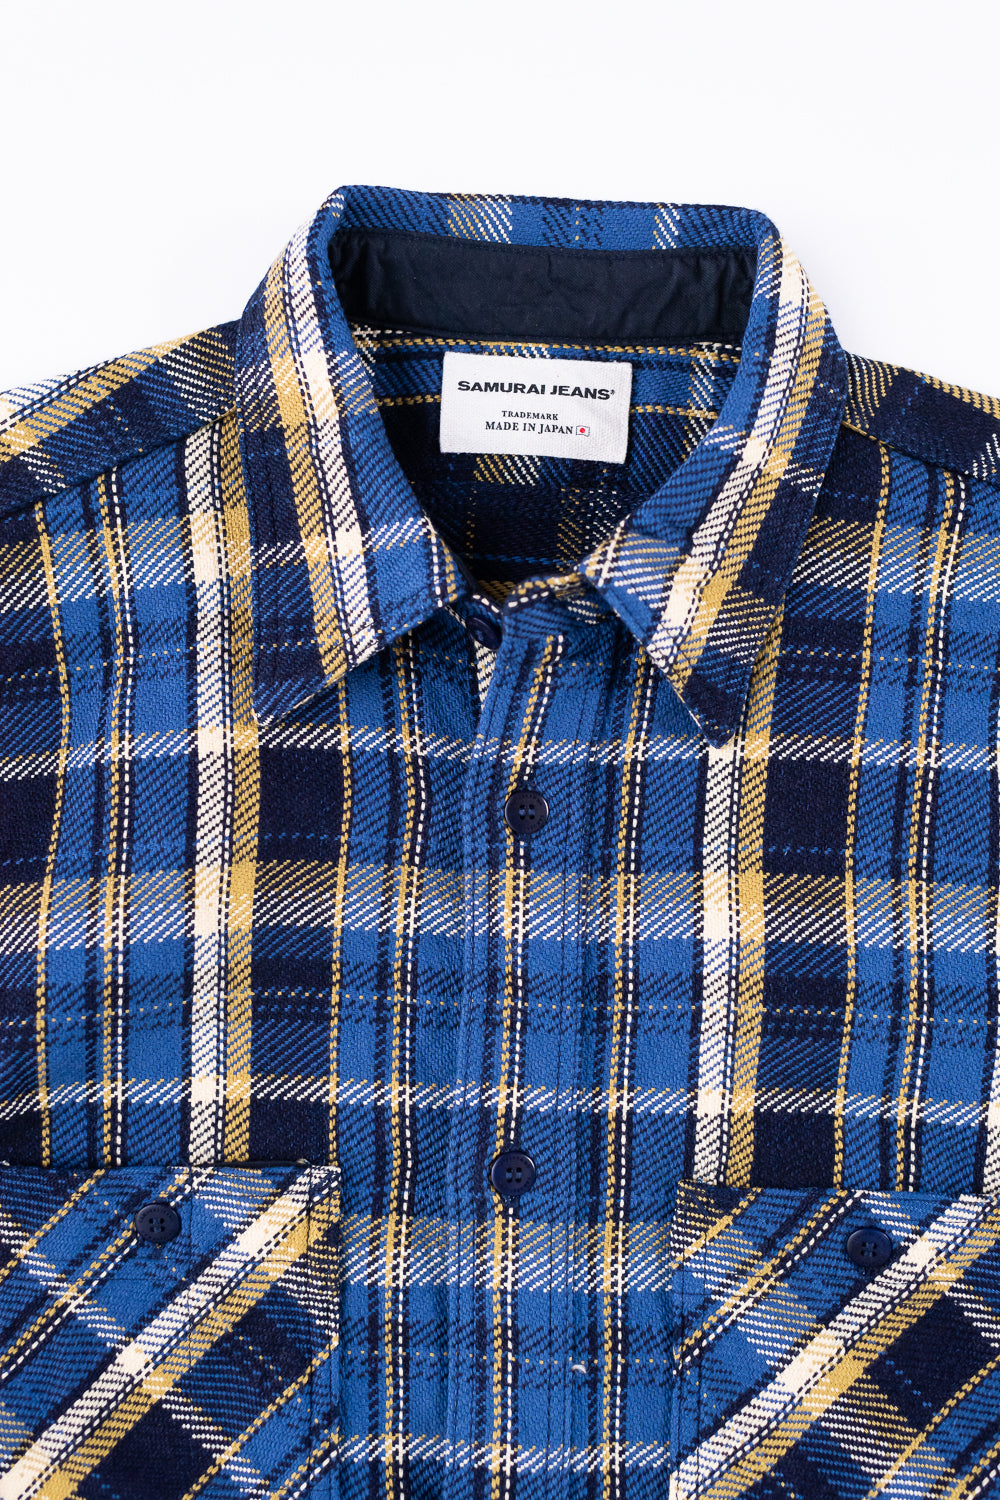 SIN23-01W - Rope Dyed Flannel Check Shirt - Blue, Indigo